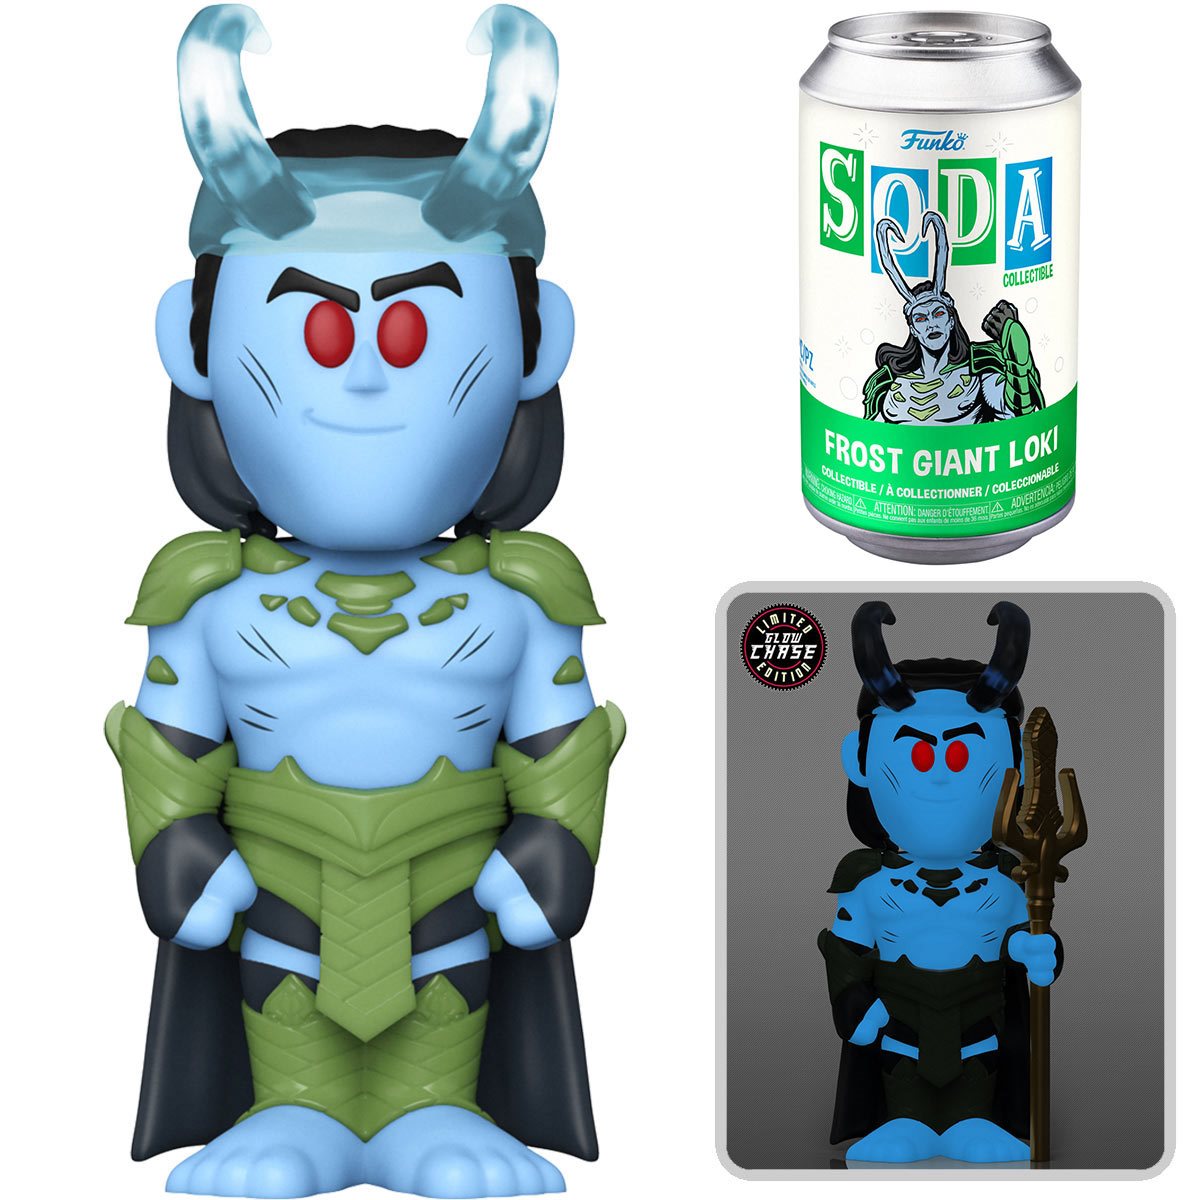 Funko Soda! Marvel's What If Loki Frost Giant Soda Figure